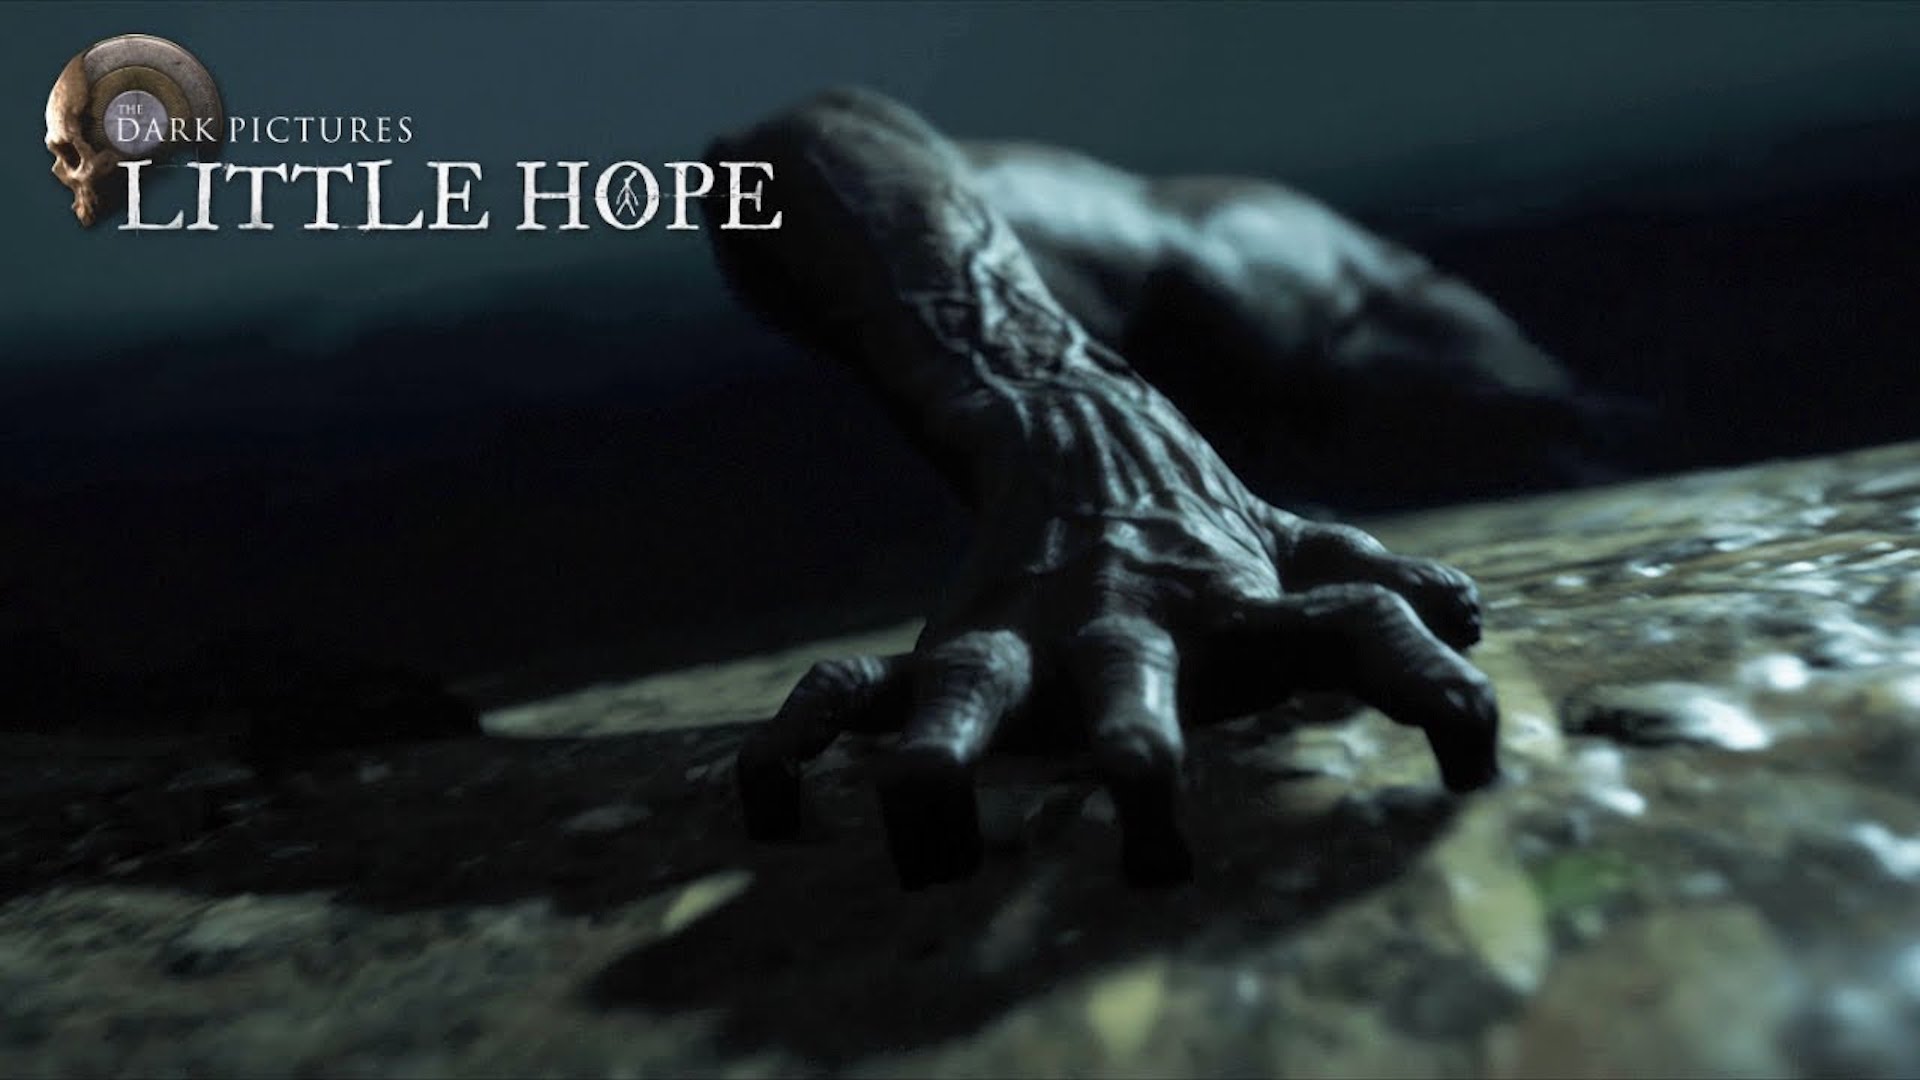 The Dark Pictures Anthology: Little Hope pc-vereisten onthuld